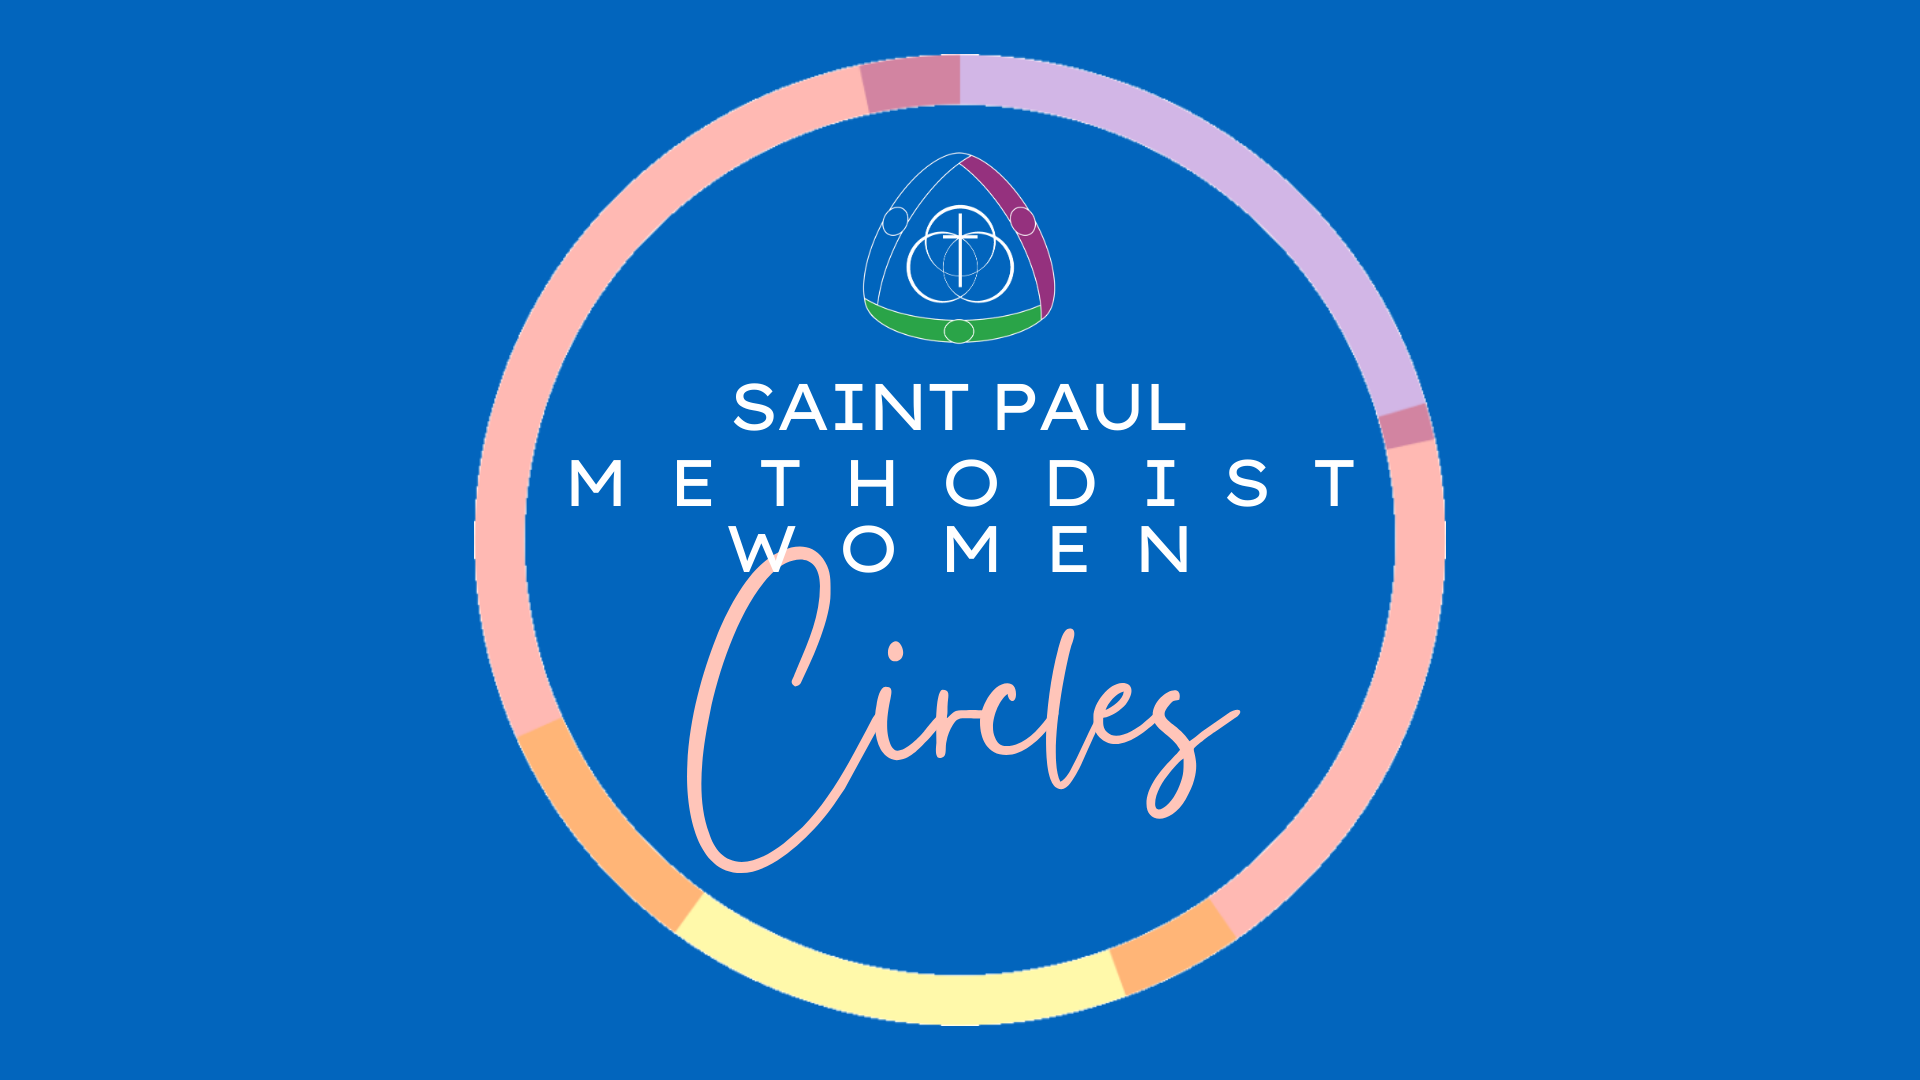 Saint Paul Methodist Women Circles